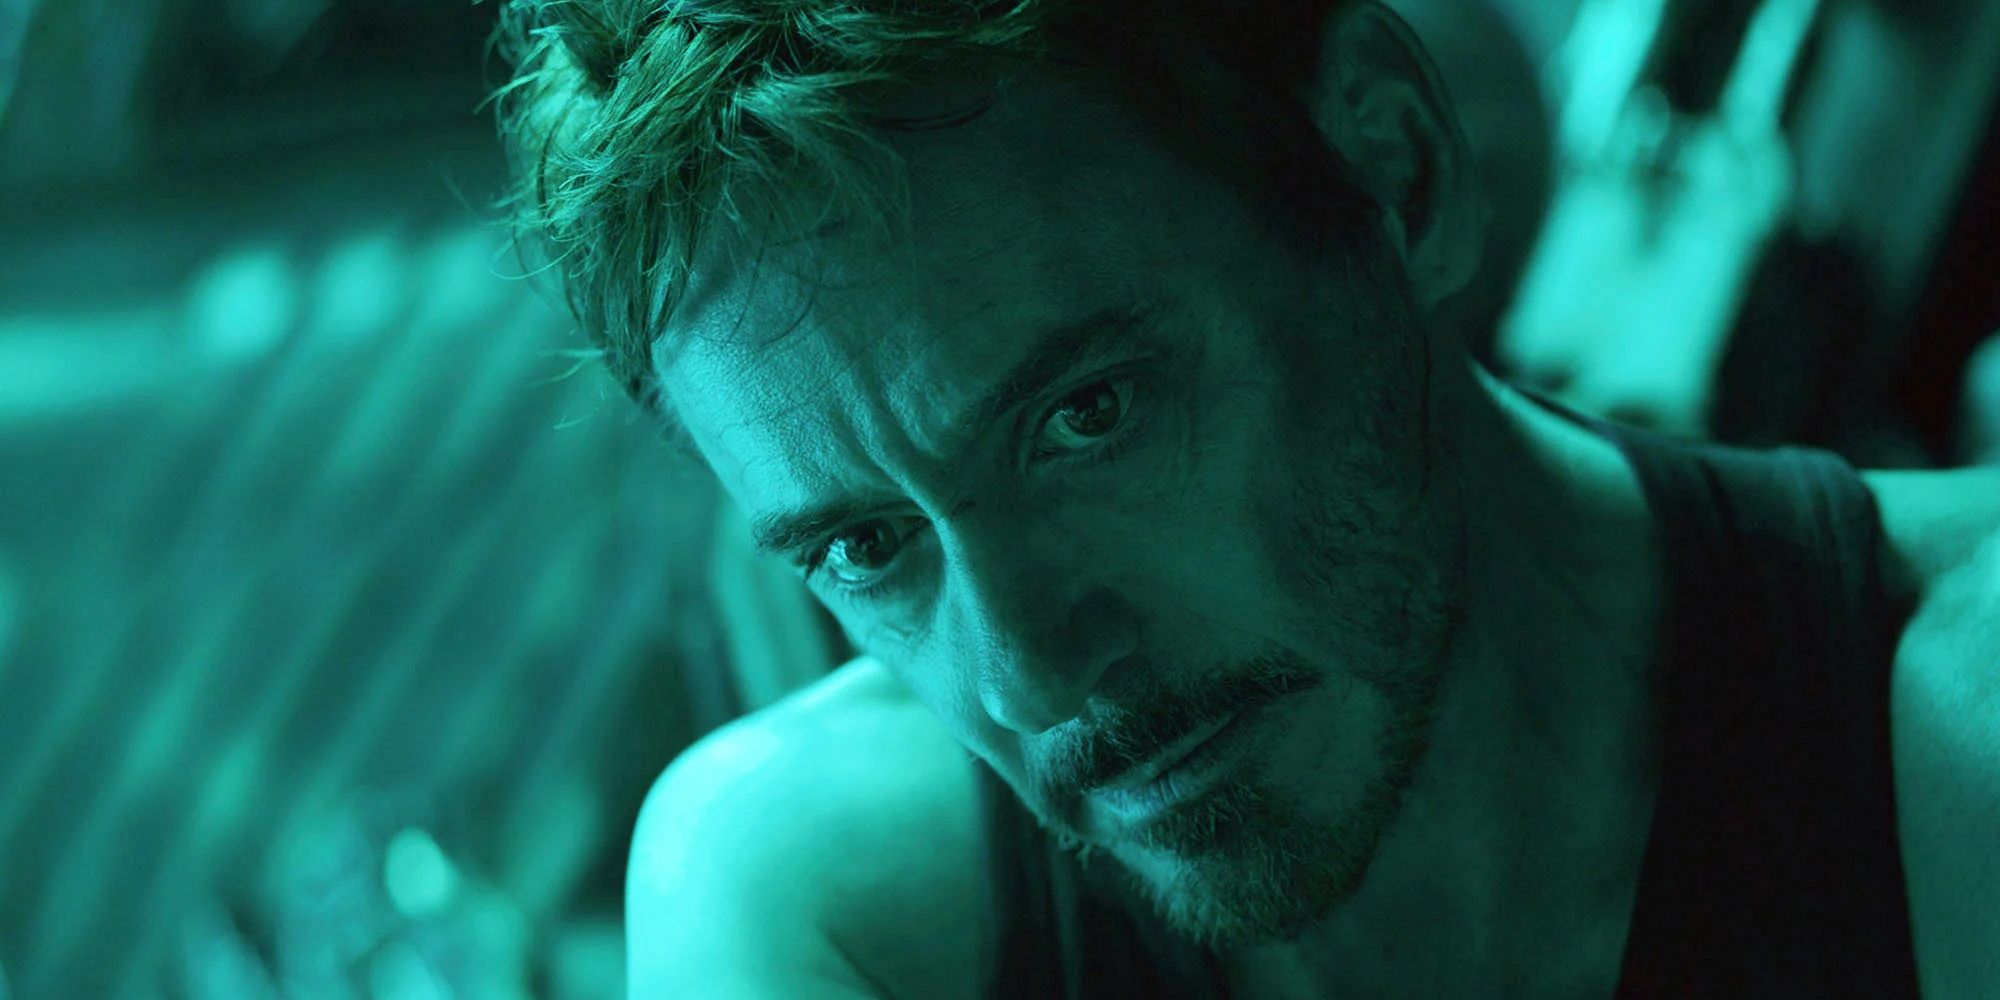 Tony Stark aboard the Benatar at the beginning of Avengers Endgame